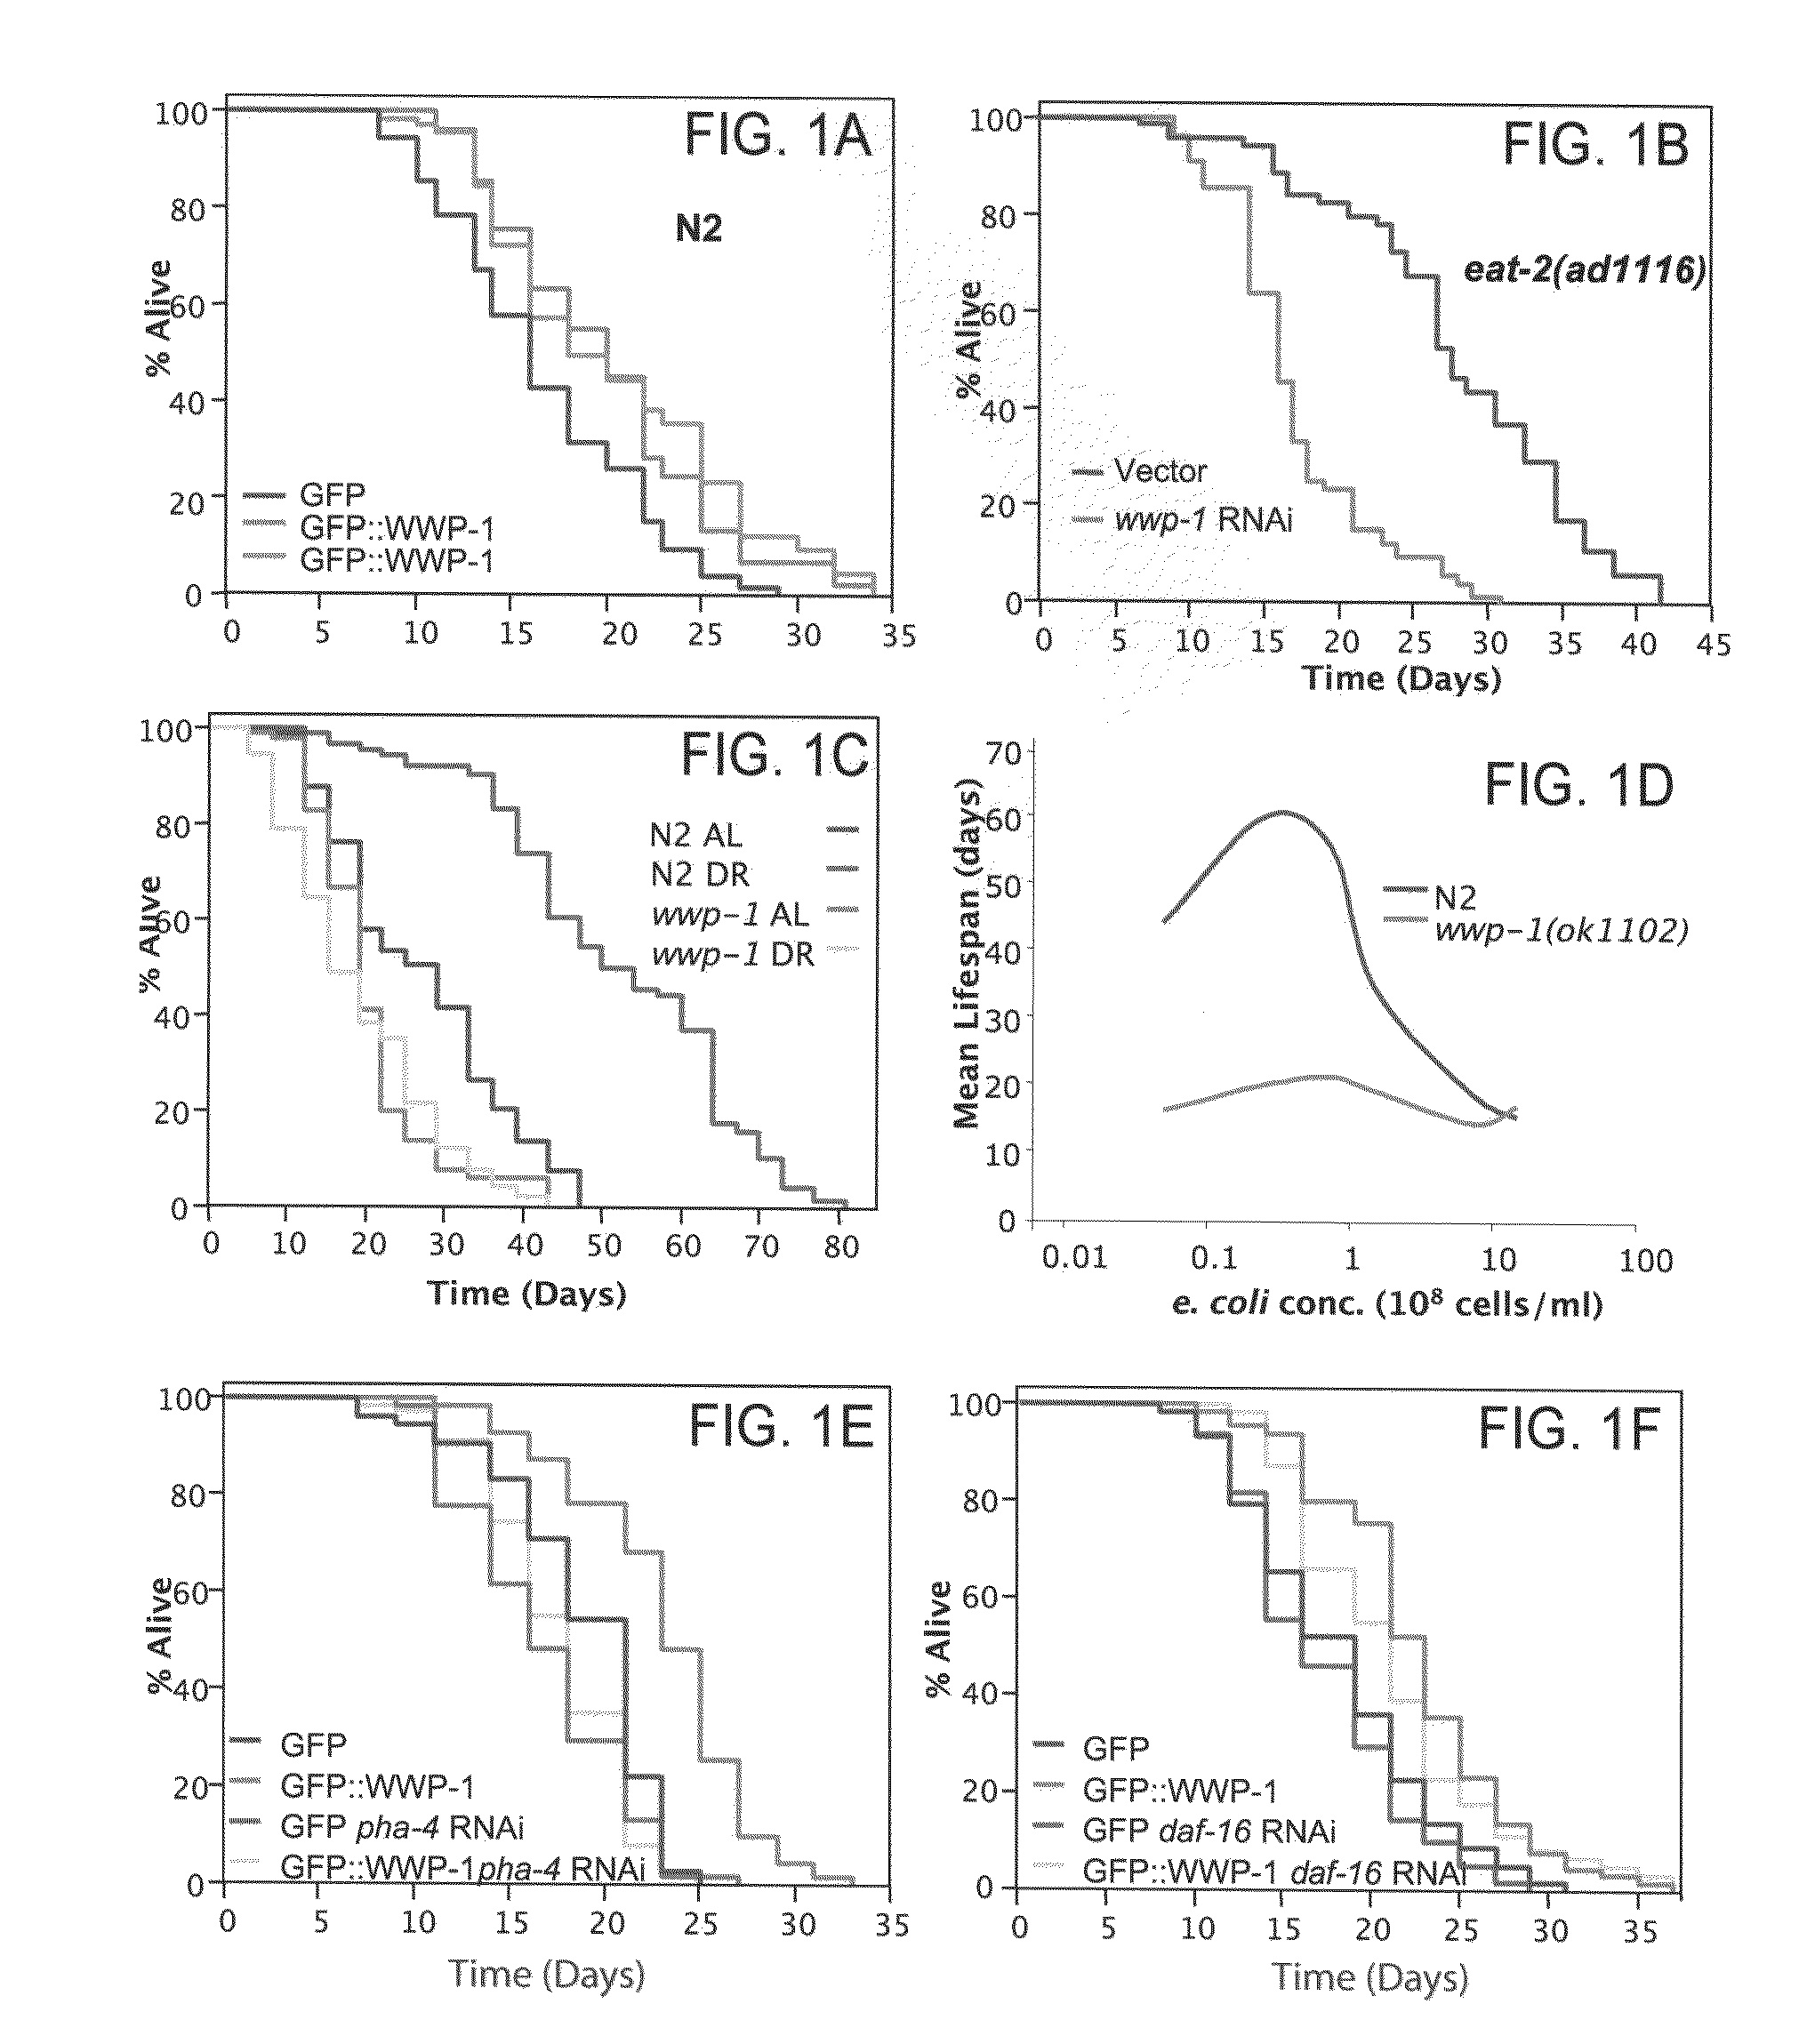 Increasing lifespan by modulation of WWP-1 and UBC-18